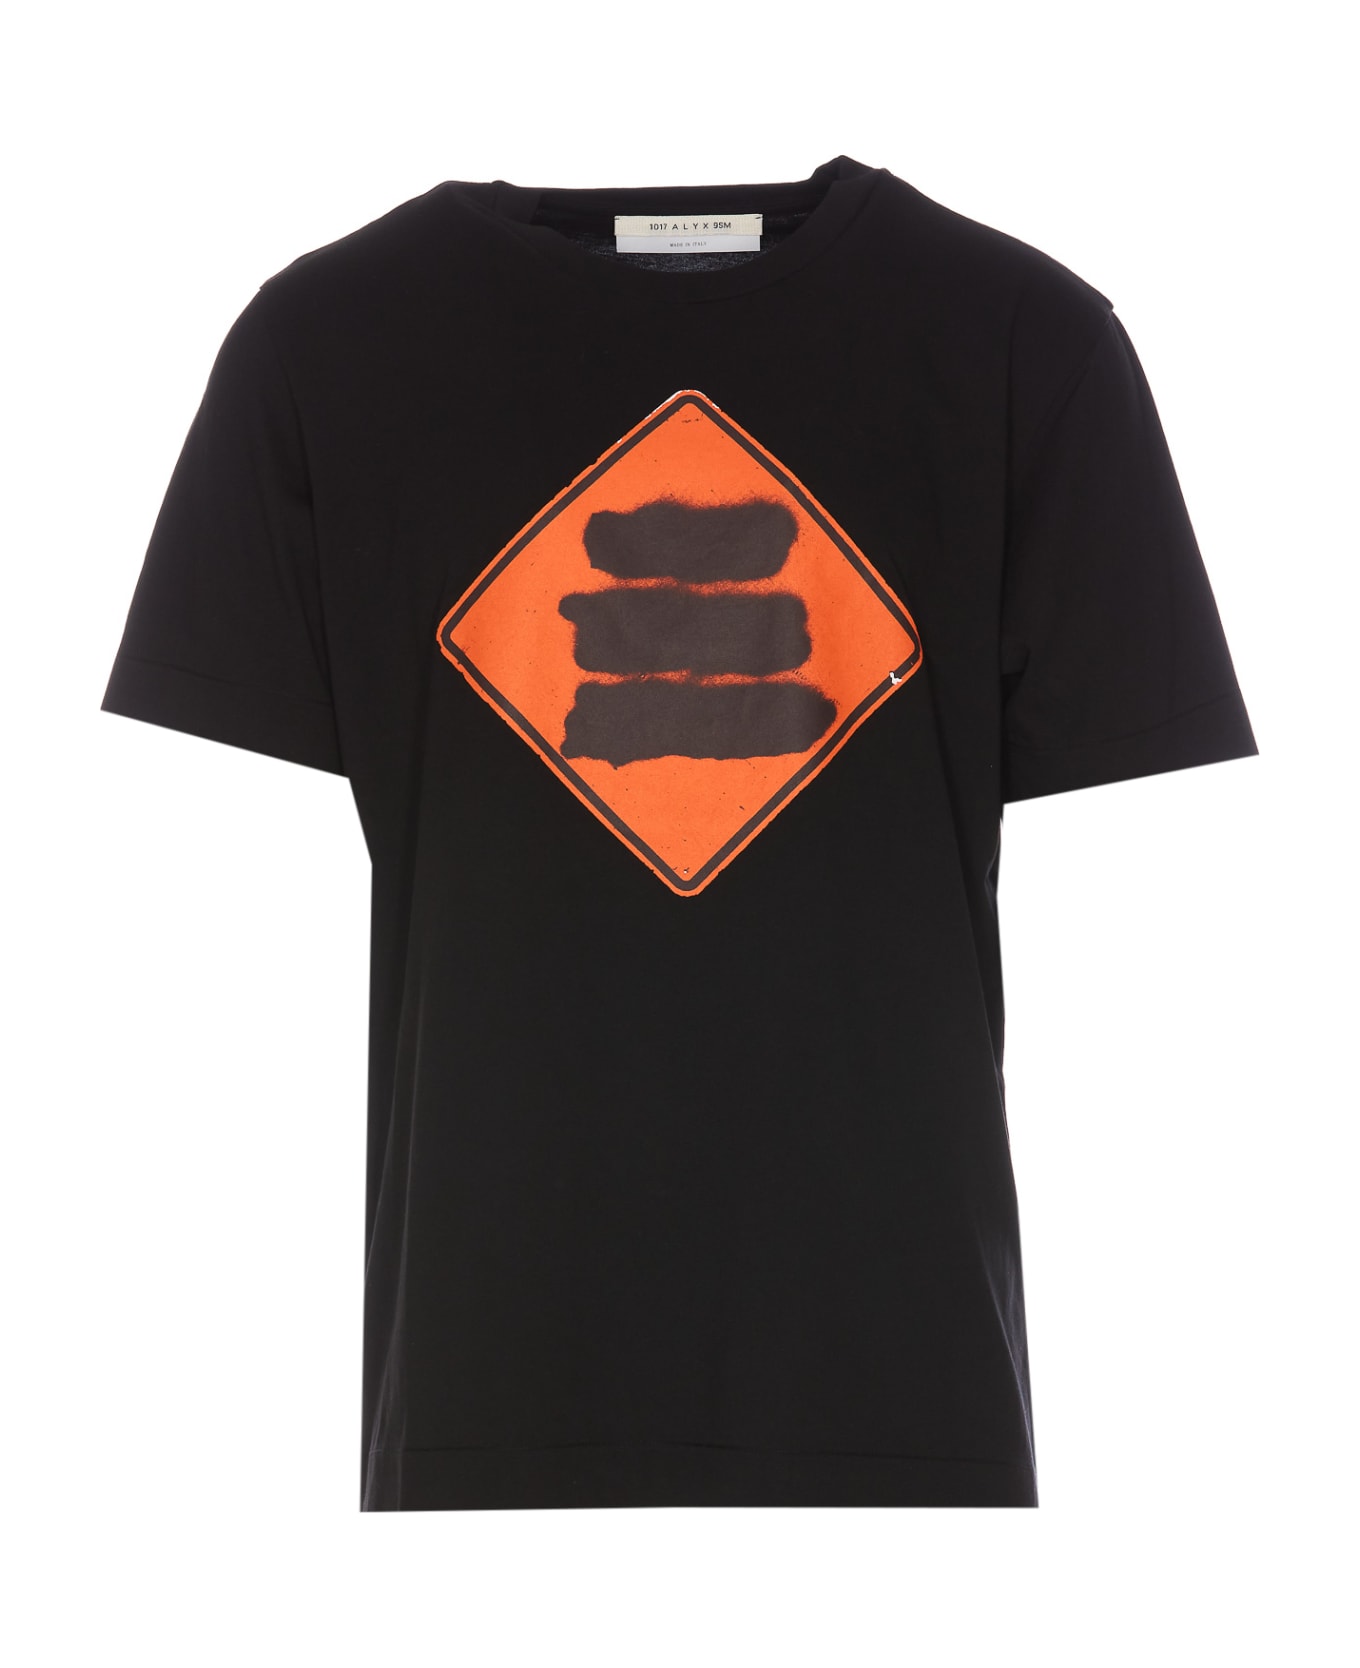 1017 ALYX 9SM Logo T-shirt - Black